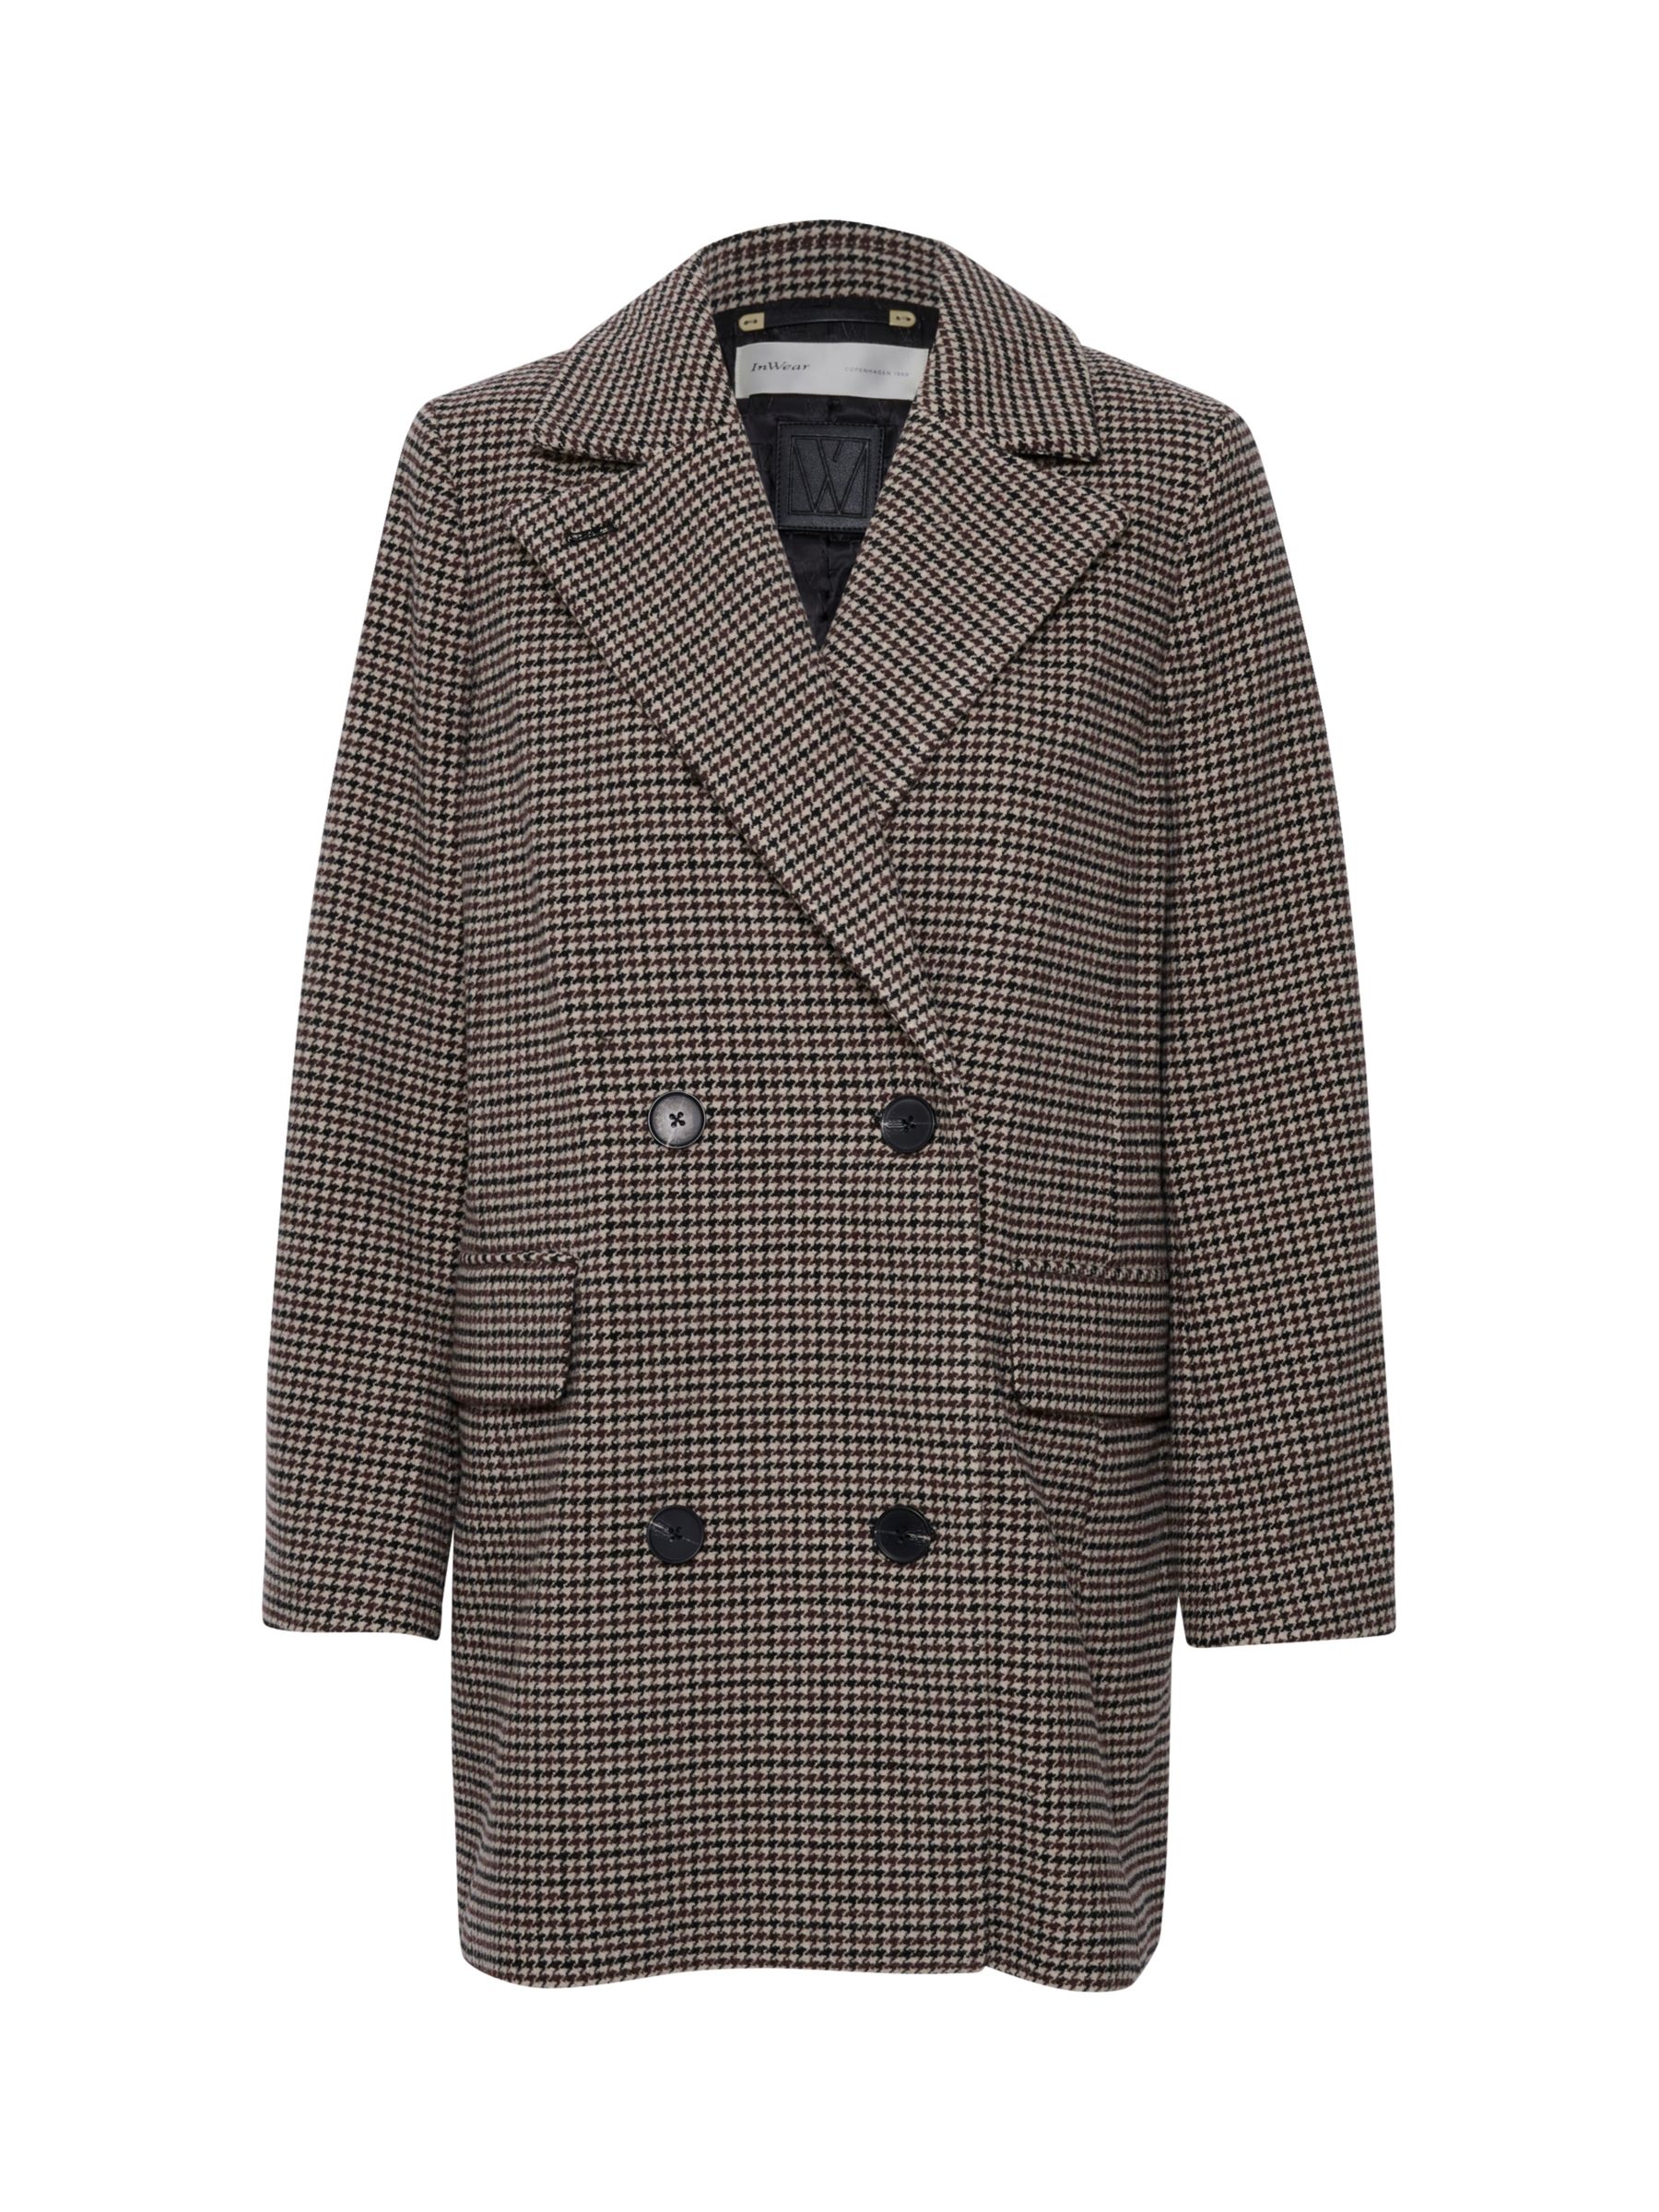 InWear Peyton Blazer Coat, Houndstooth Check at John Lewis & Partners